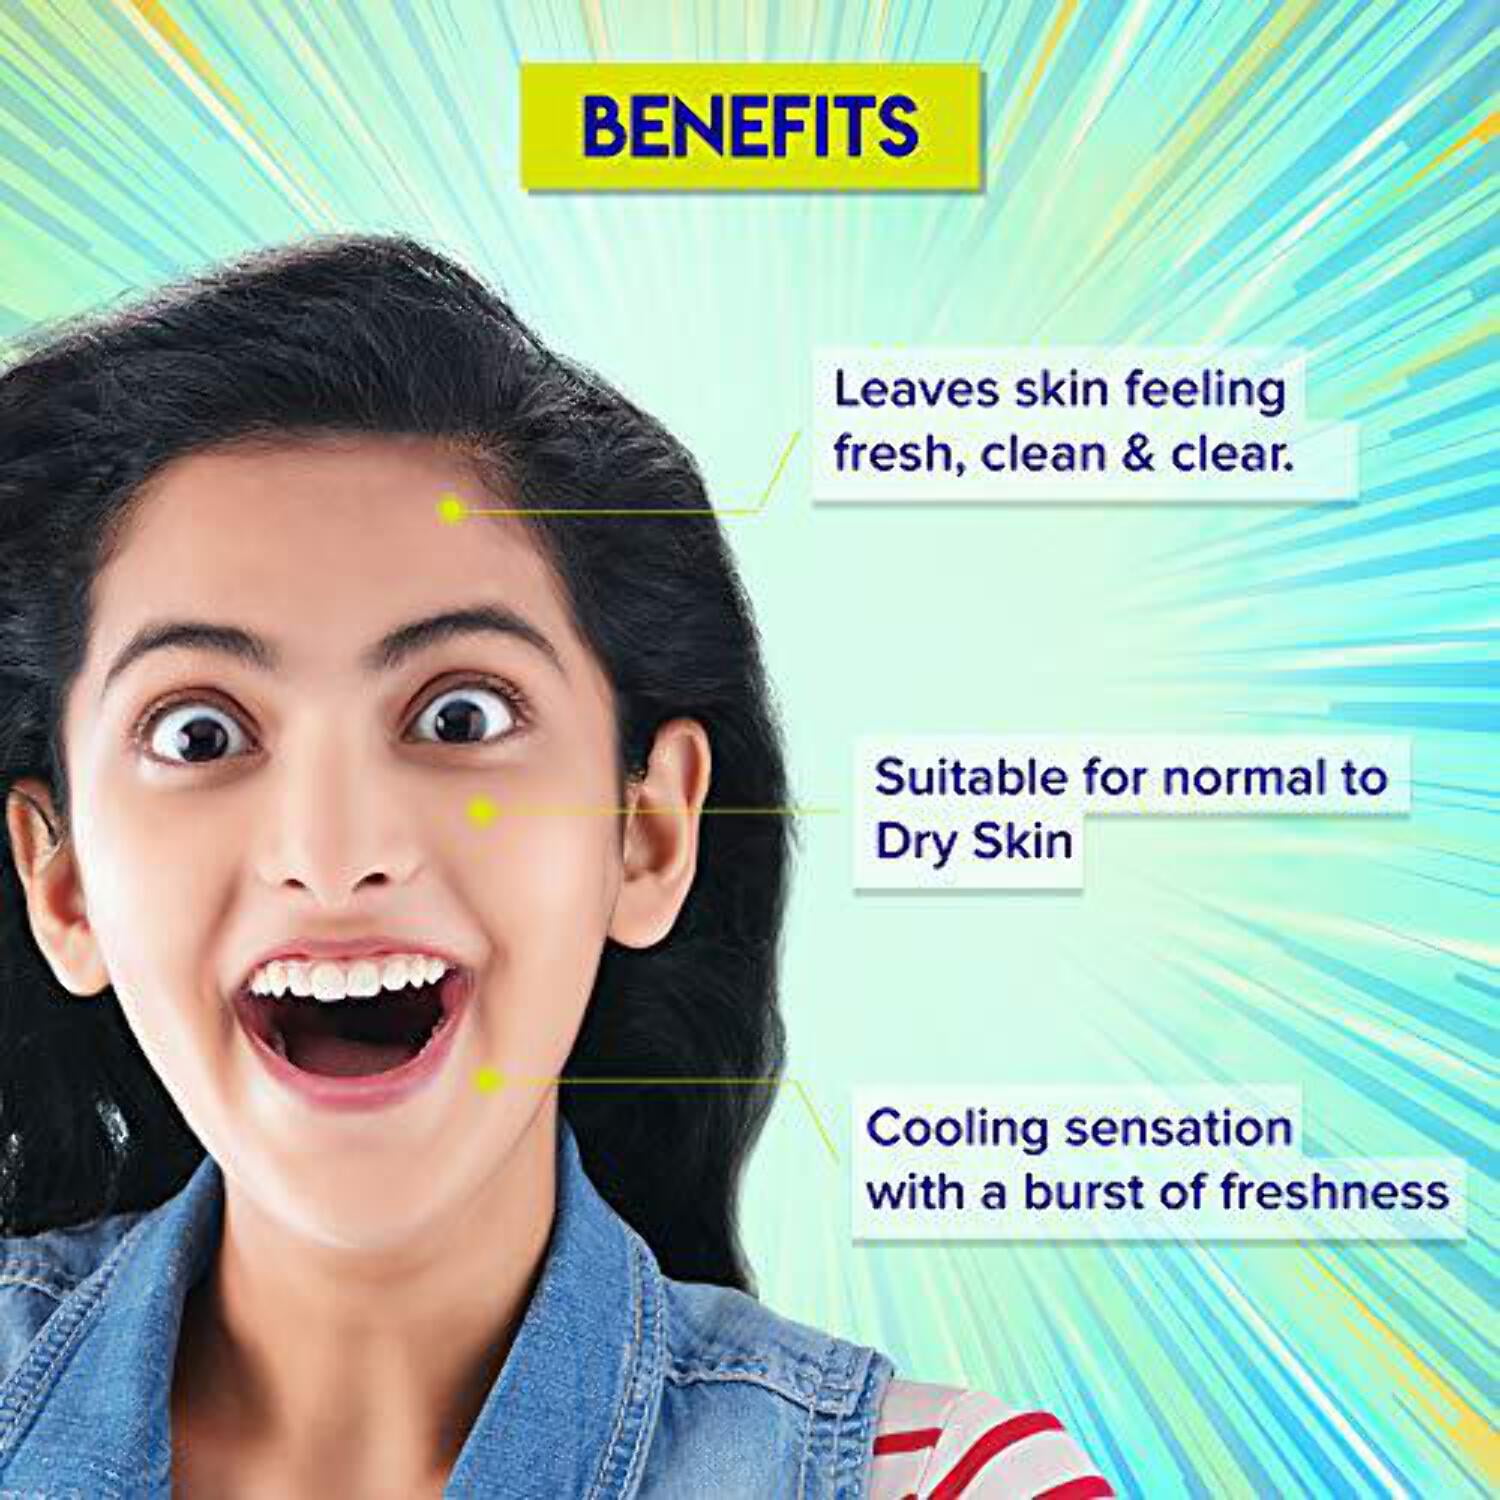 Clean & Clear Morning Energy Aqua Splash Blue Face wash - Beuflix – BEUFLIX